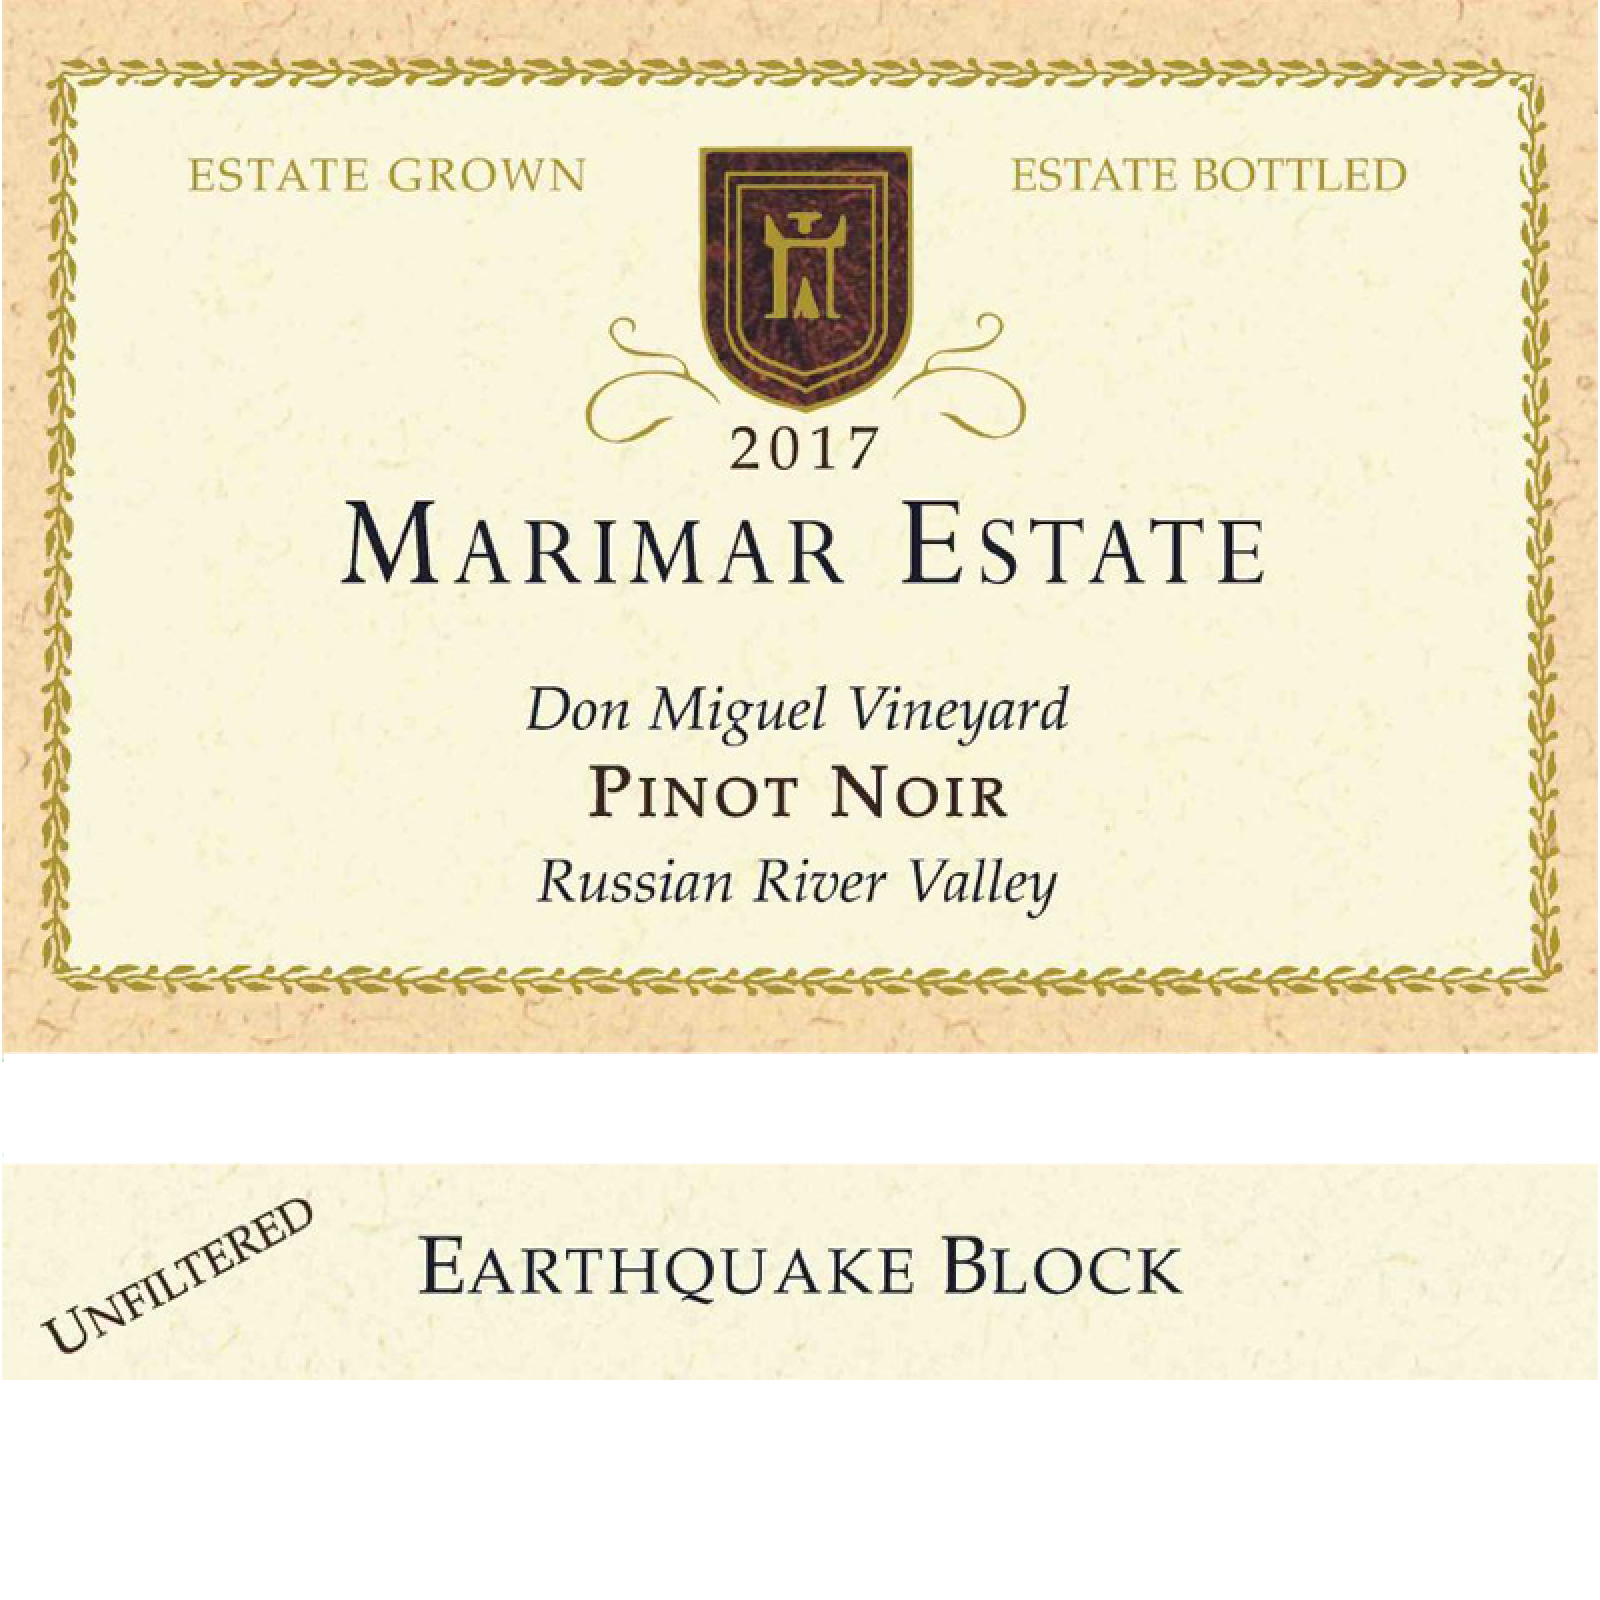 2017 Marimar Estate Winery Earthquake Block Pinot Noir